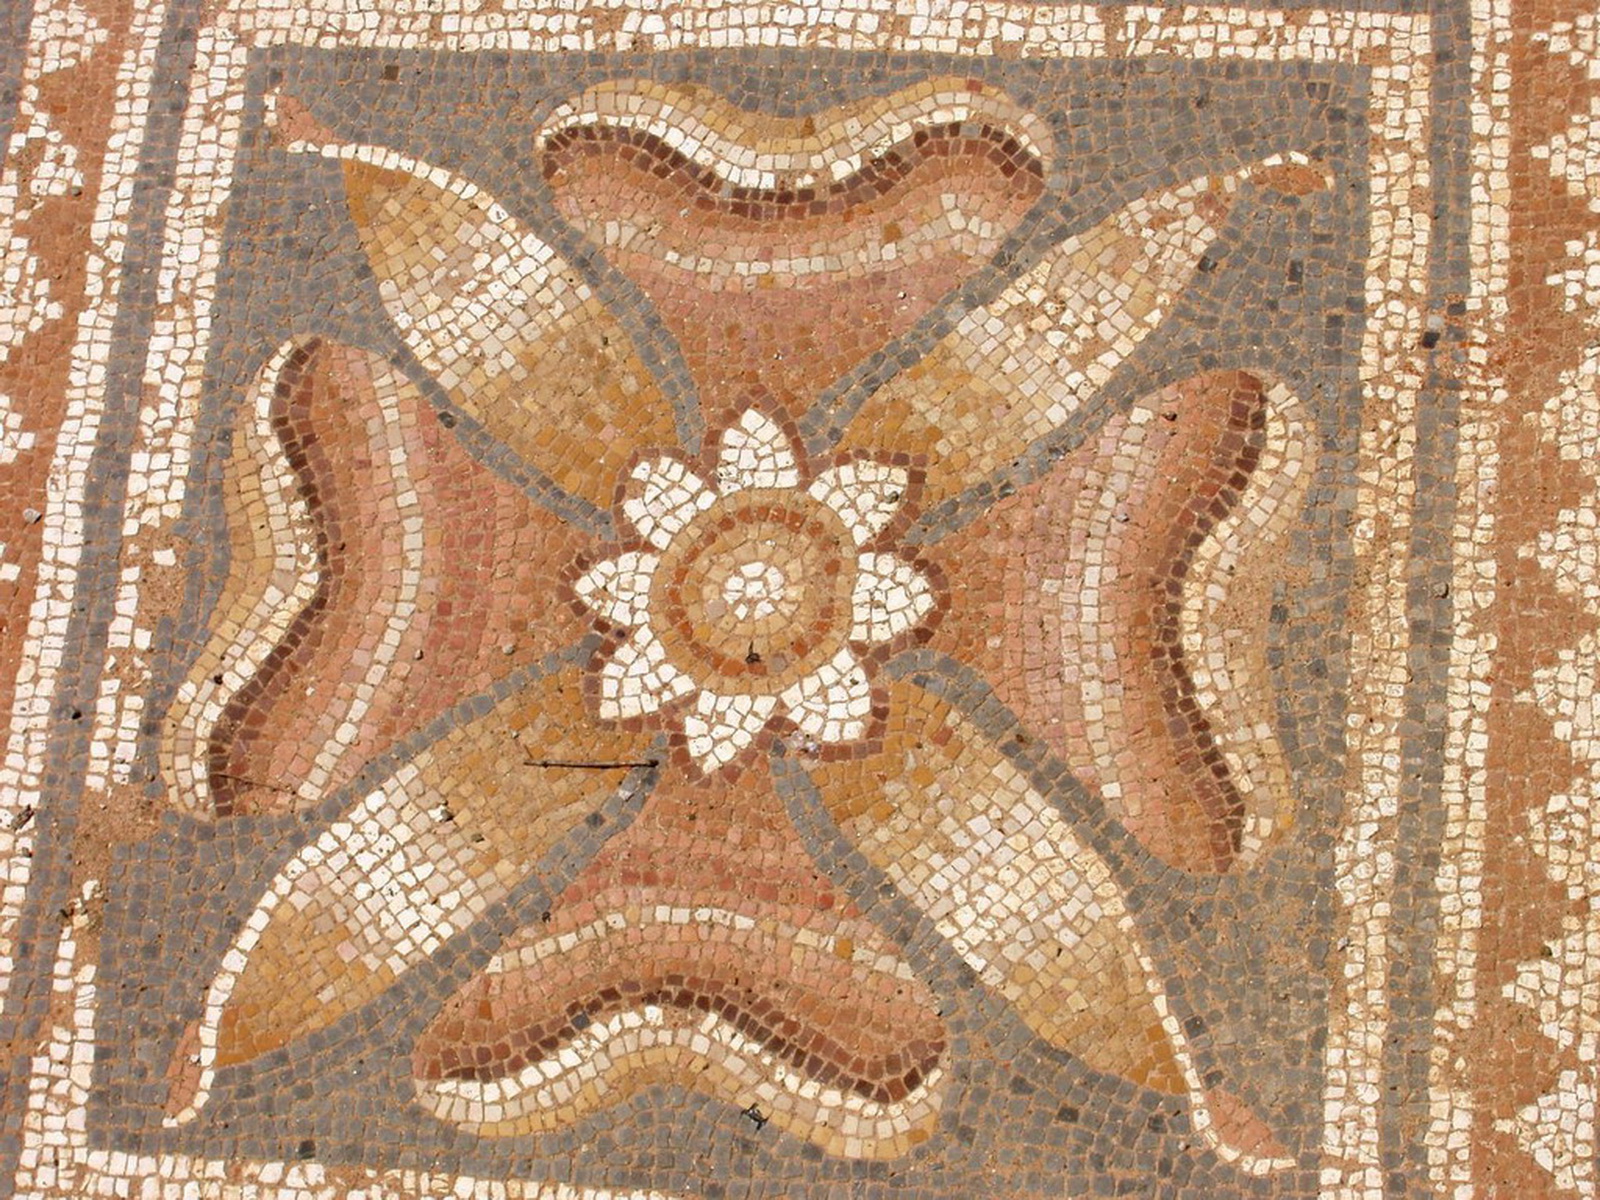 Wallpapers mosaic stone pattern on the desktop